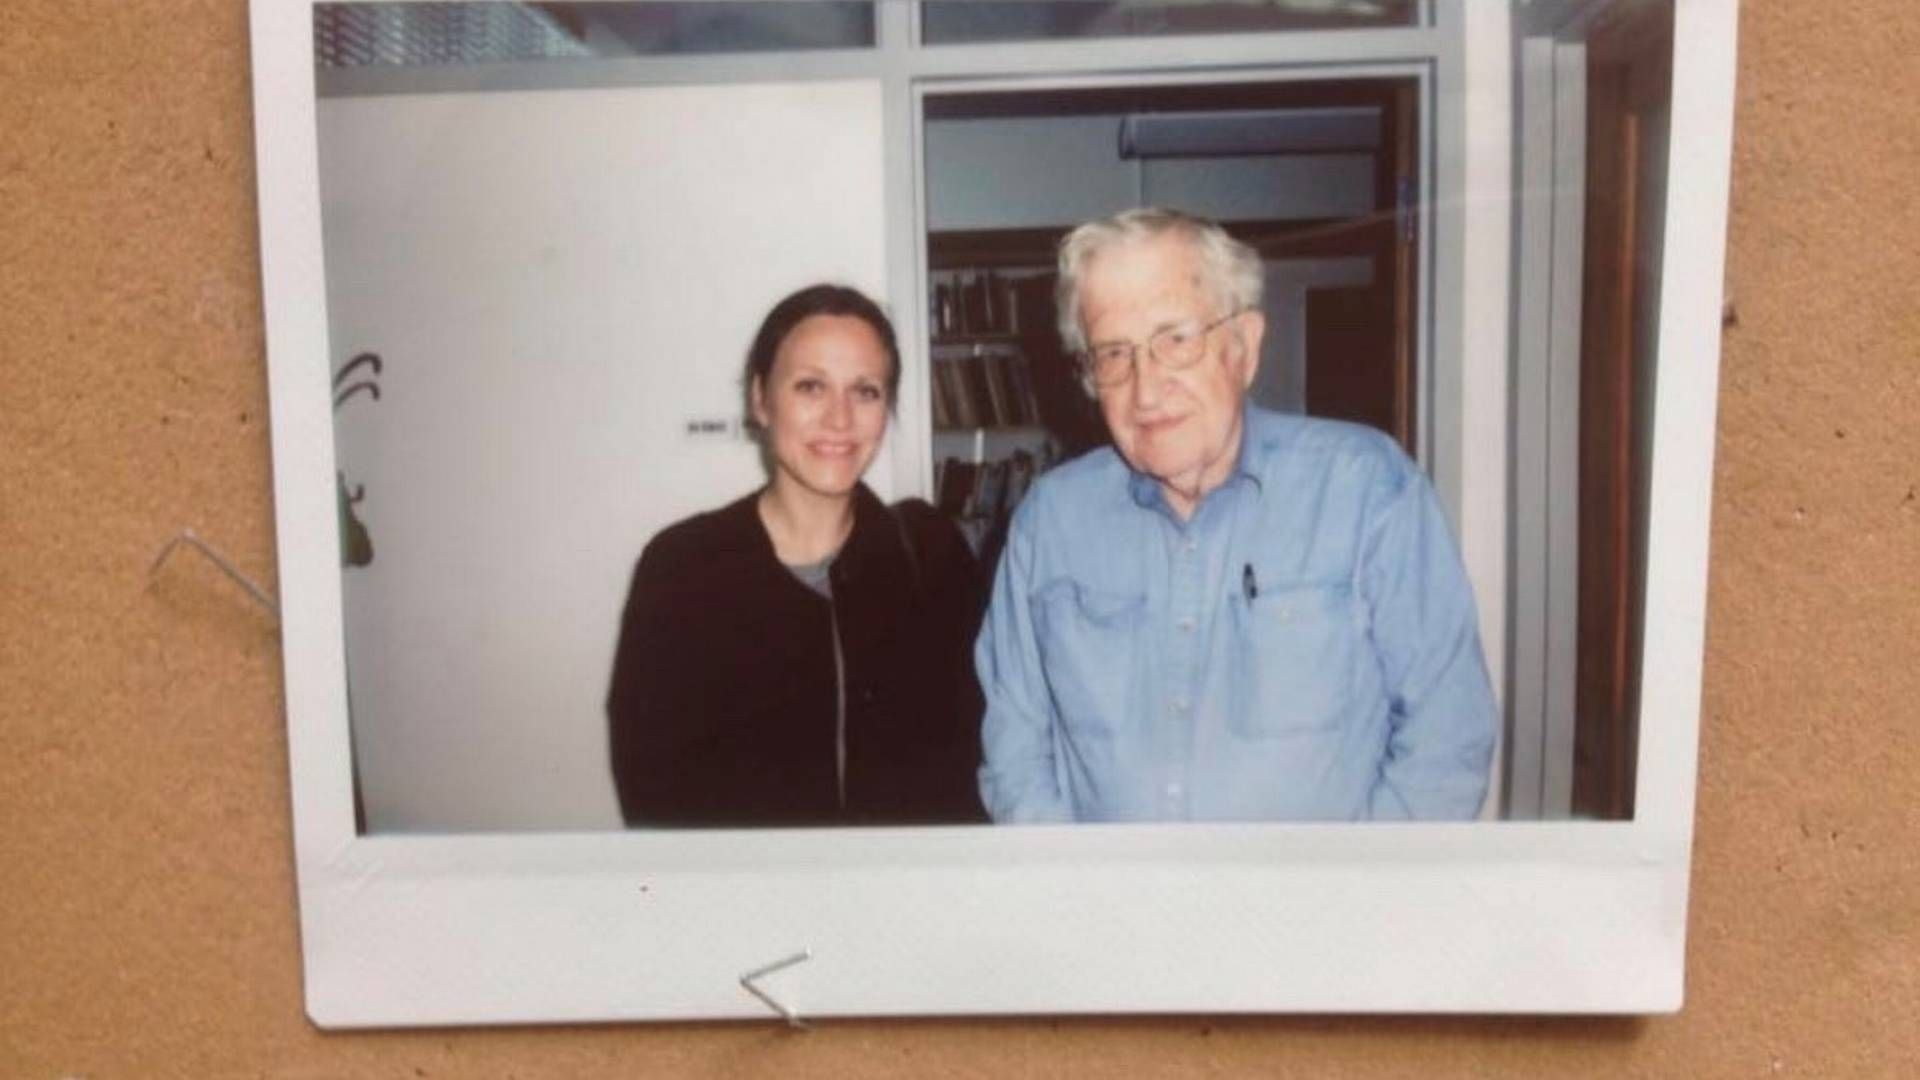 Katrine Pedersen og Noam Chomsky. Den amerikanske professors propagandamodel følger hende i hendes arbejde. Hun er dagens gæst i serien "k-nørderi". | Foto: Privat